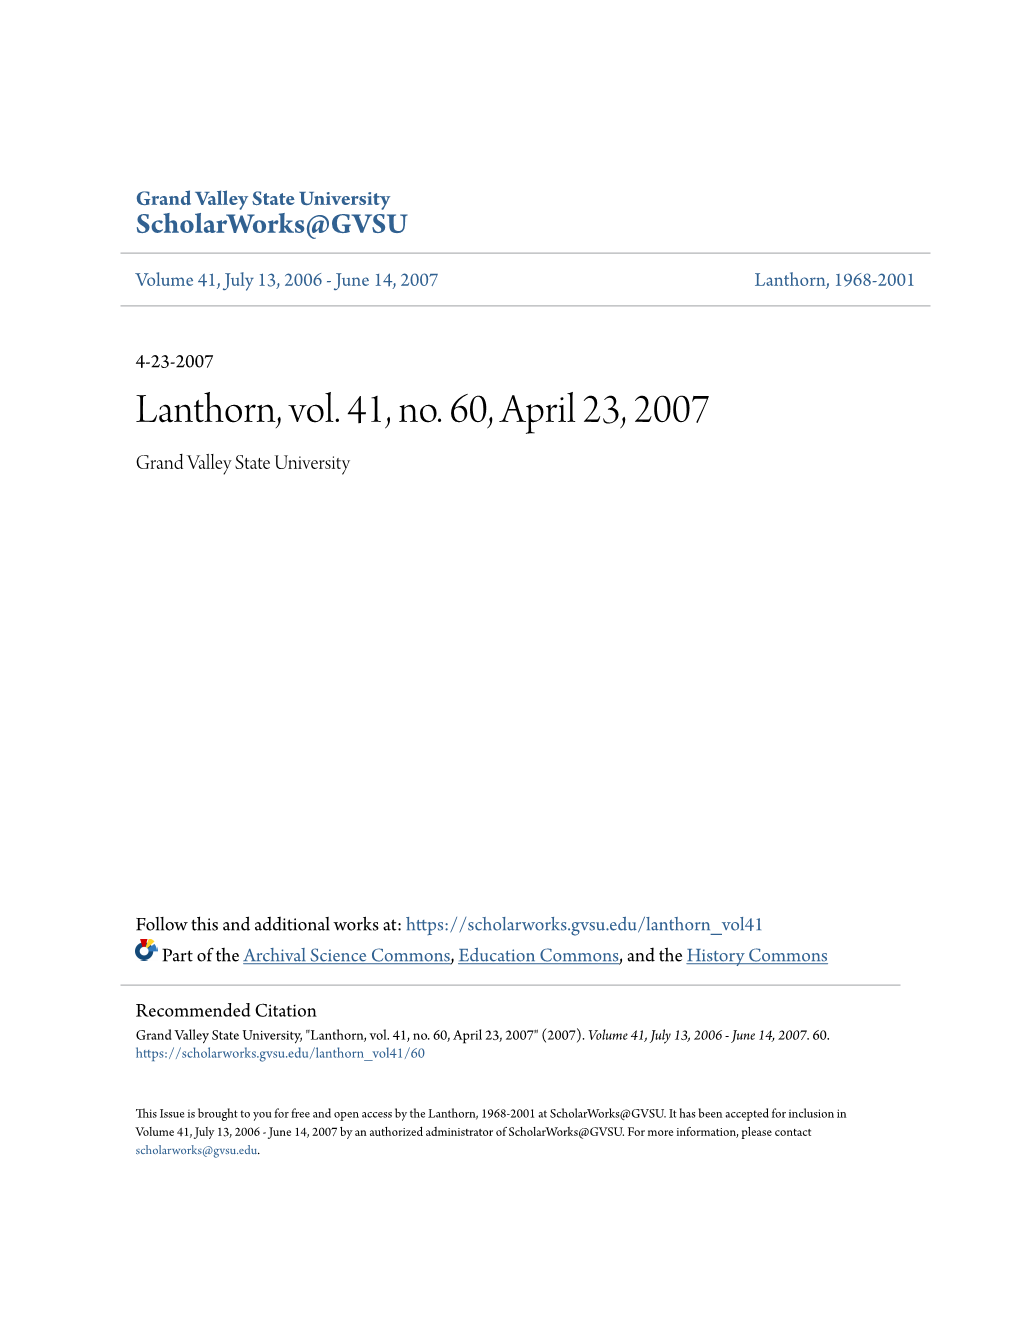 Lanthorn, Vol. 41, No. 60, April 23, 2007 Grand Valley State University